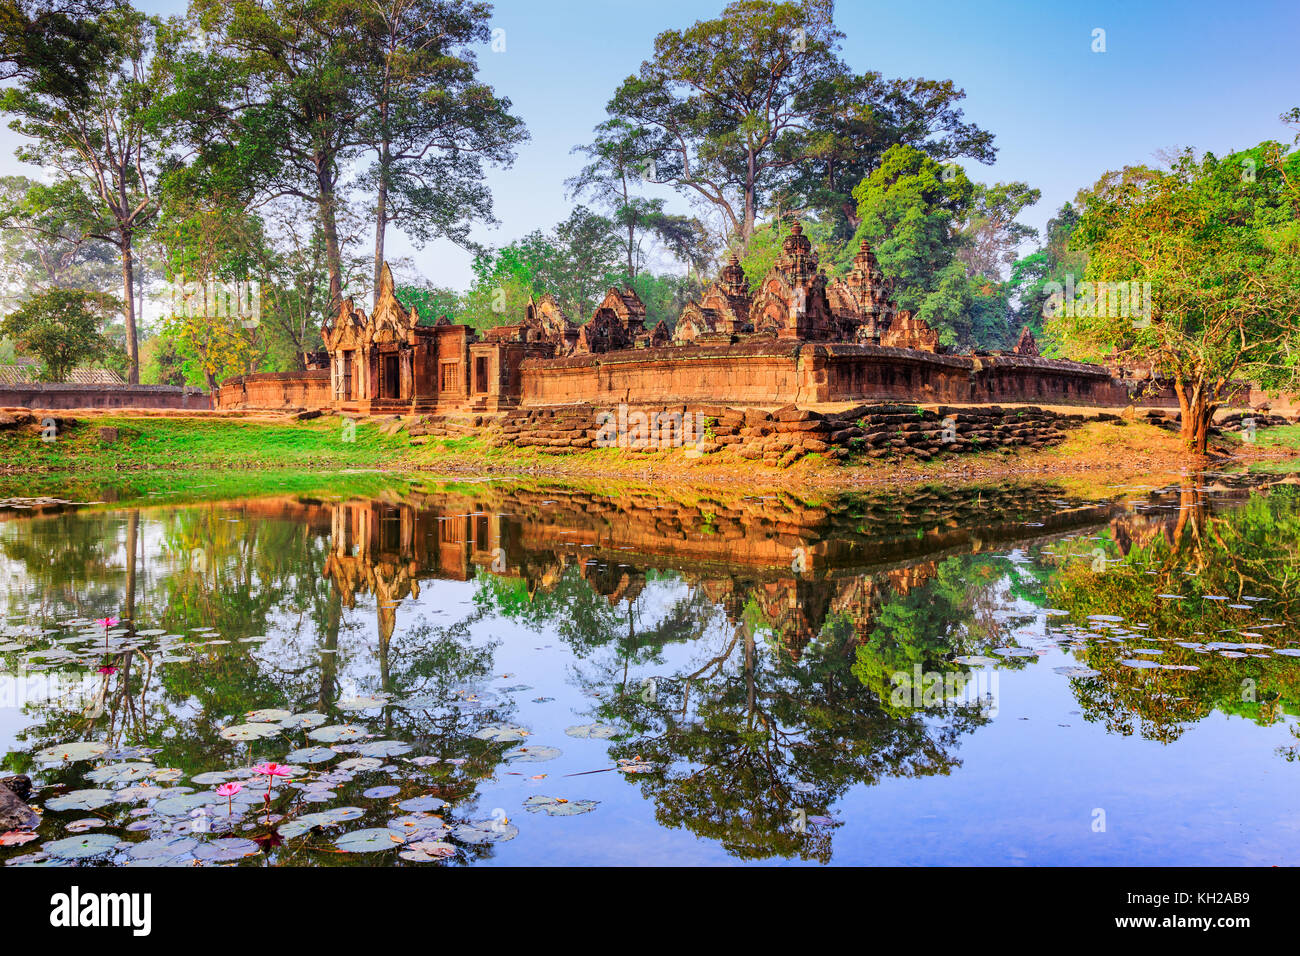 Angkor, Kambodscha. Banteay Srei (Zitadelle der Frauen) Tempel. Stockfoto